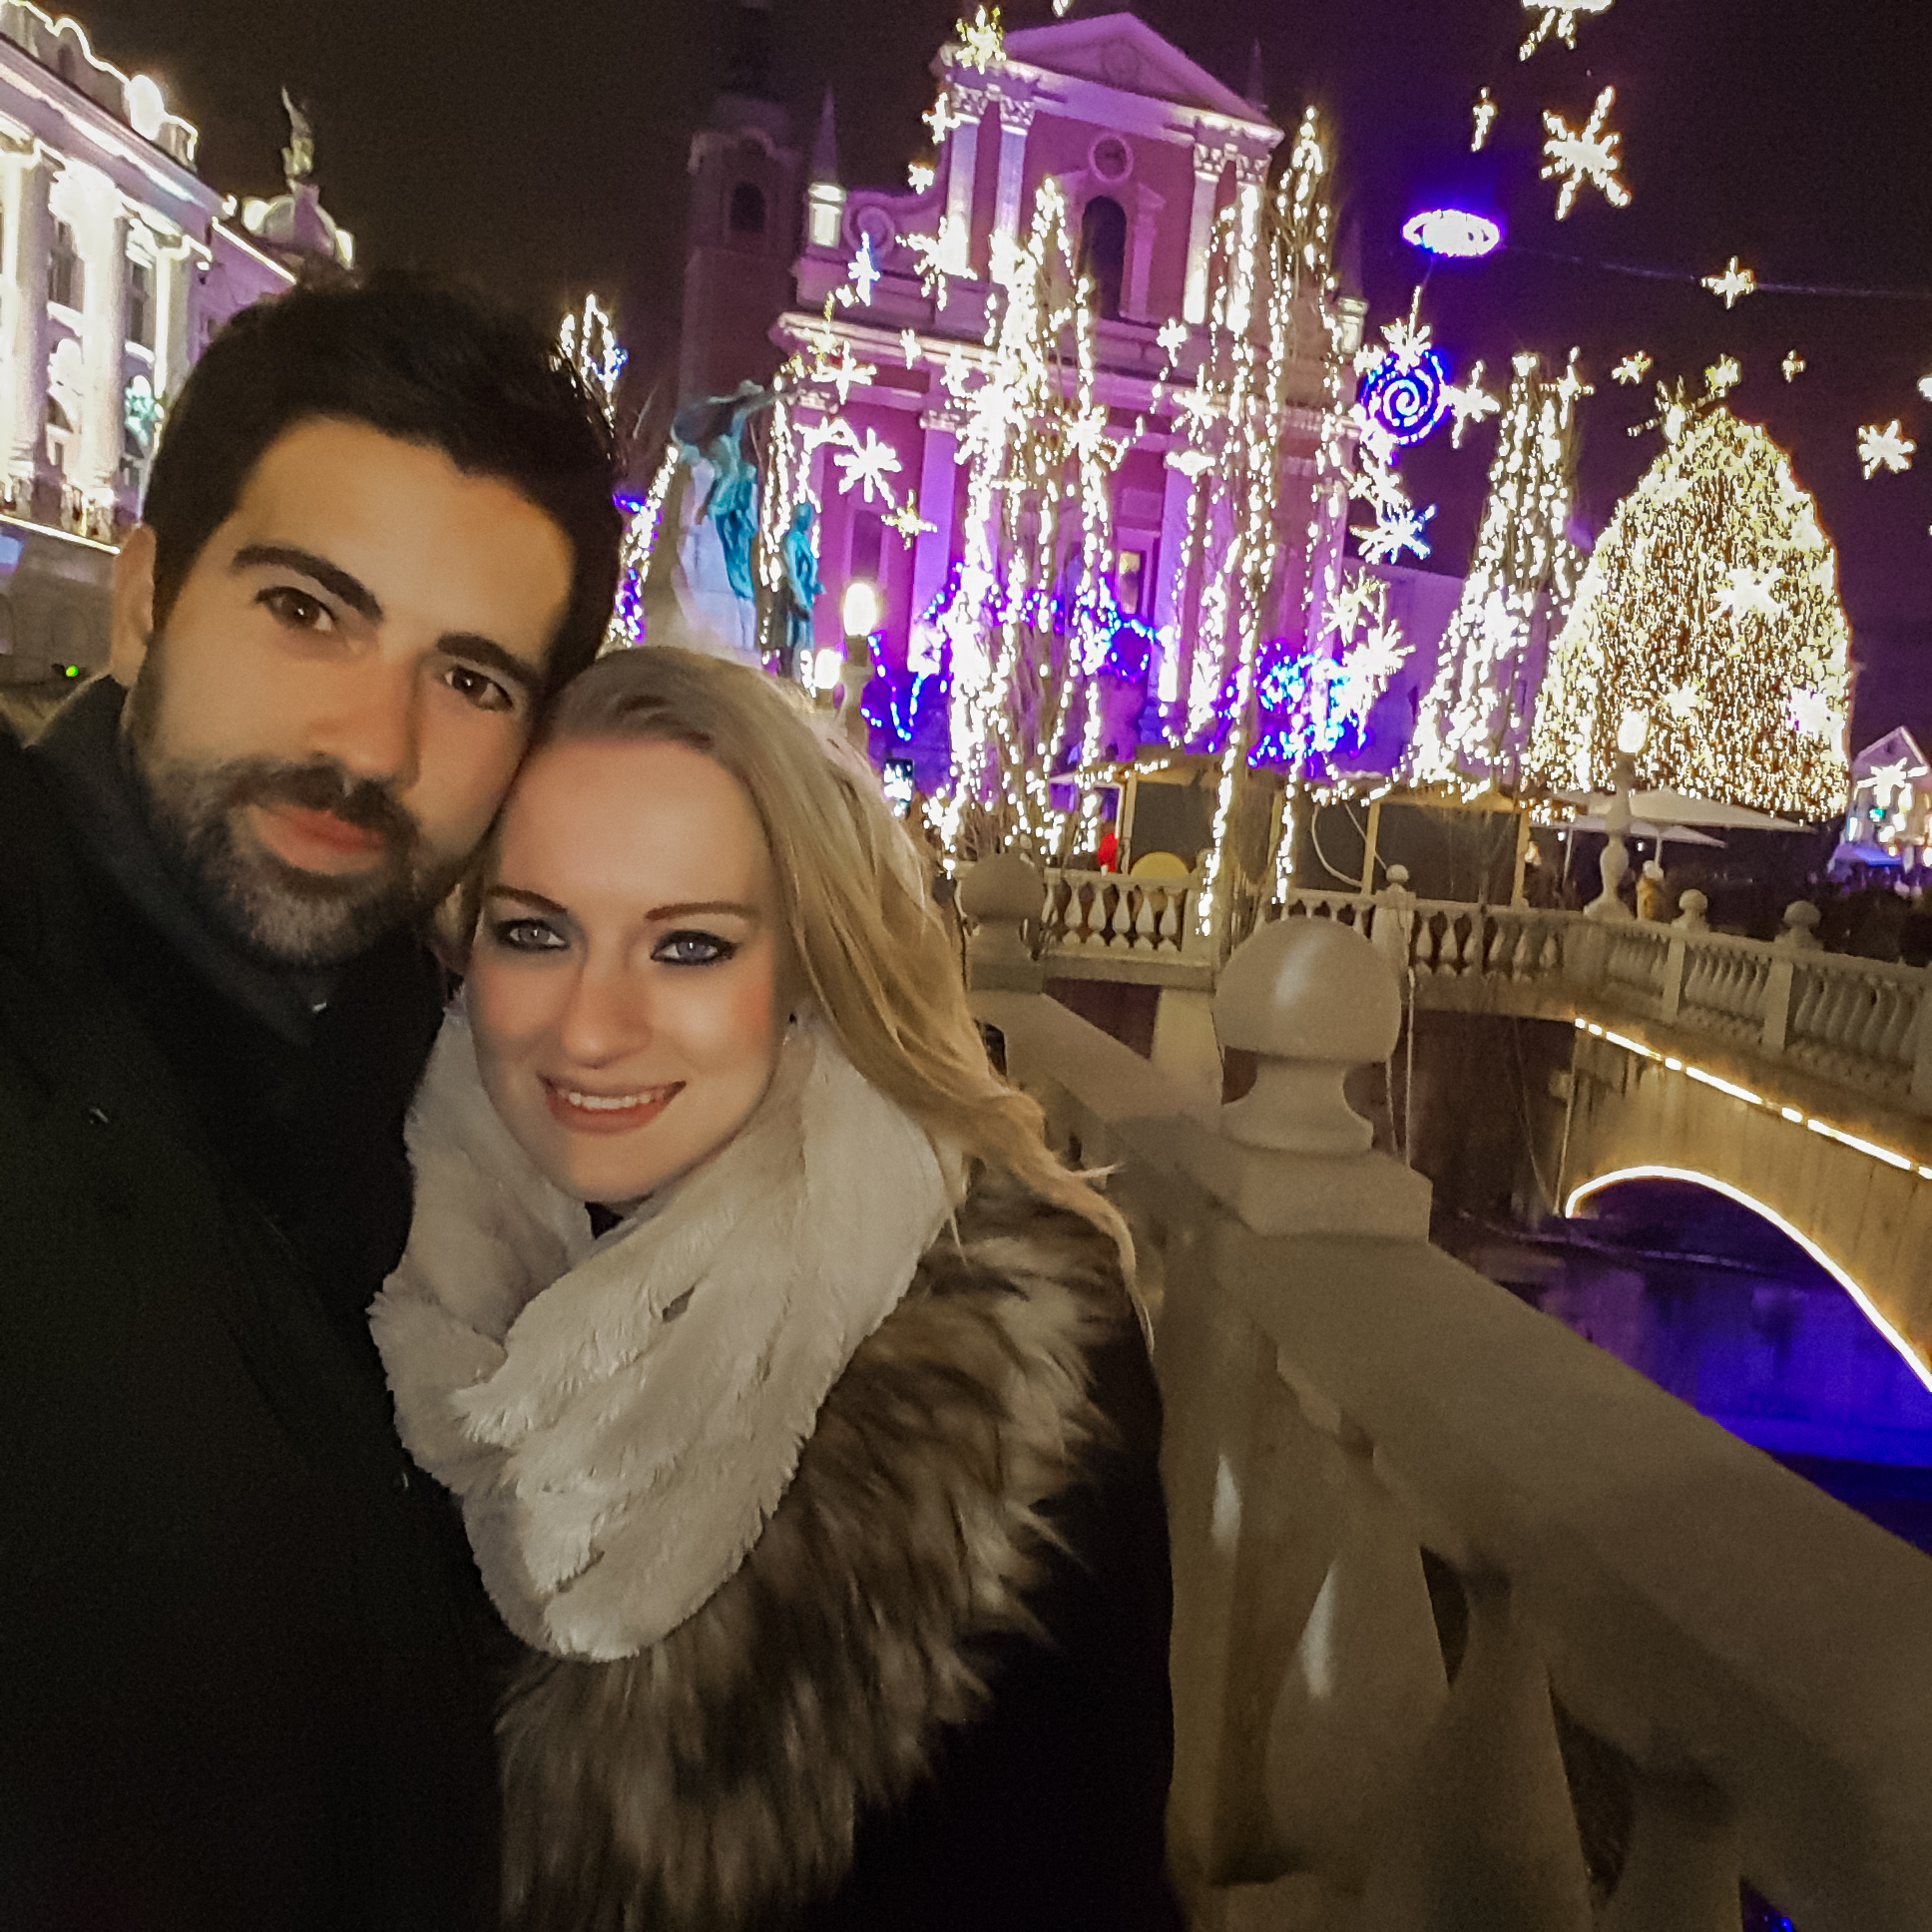 Couple posing with Christmas lights in Ljubljana, Slovenia